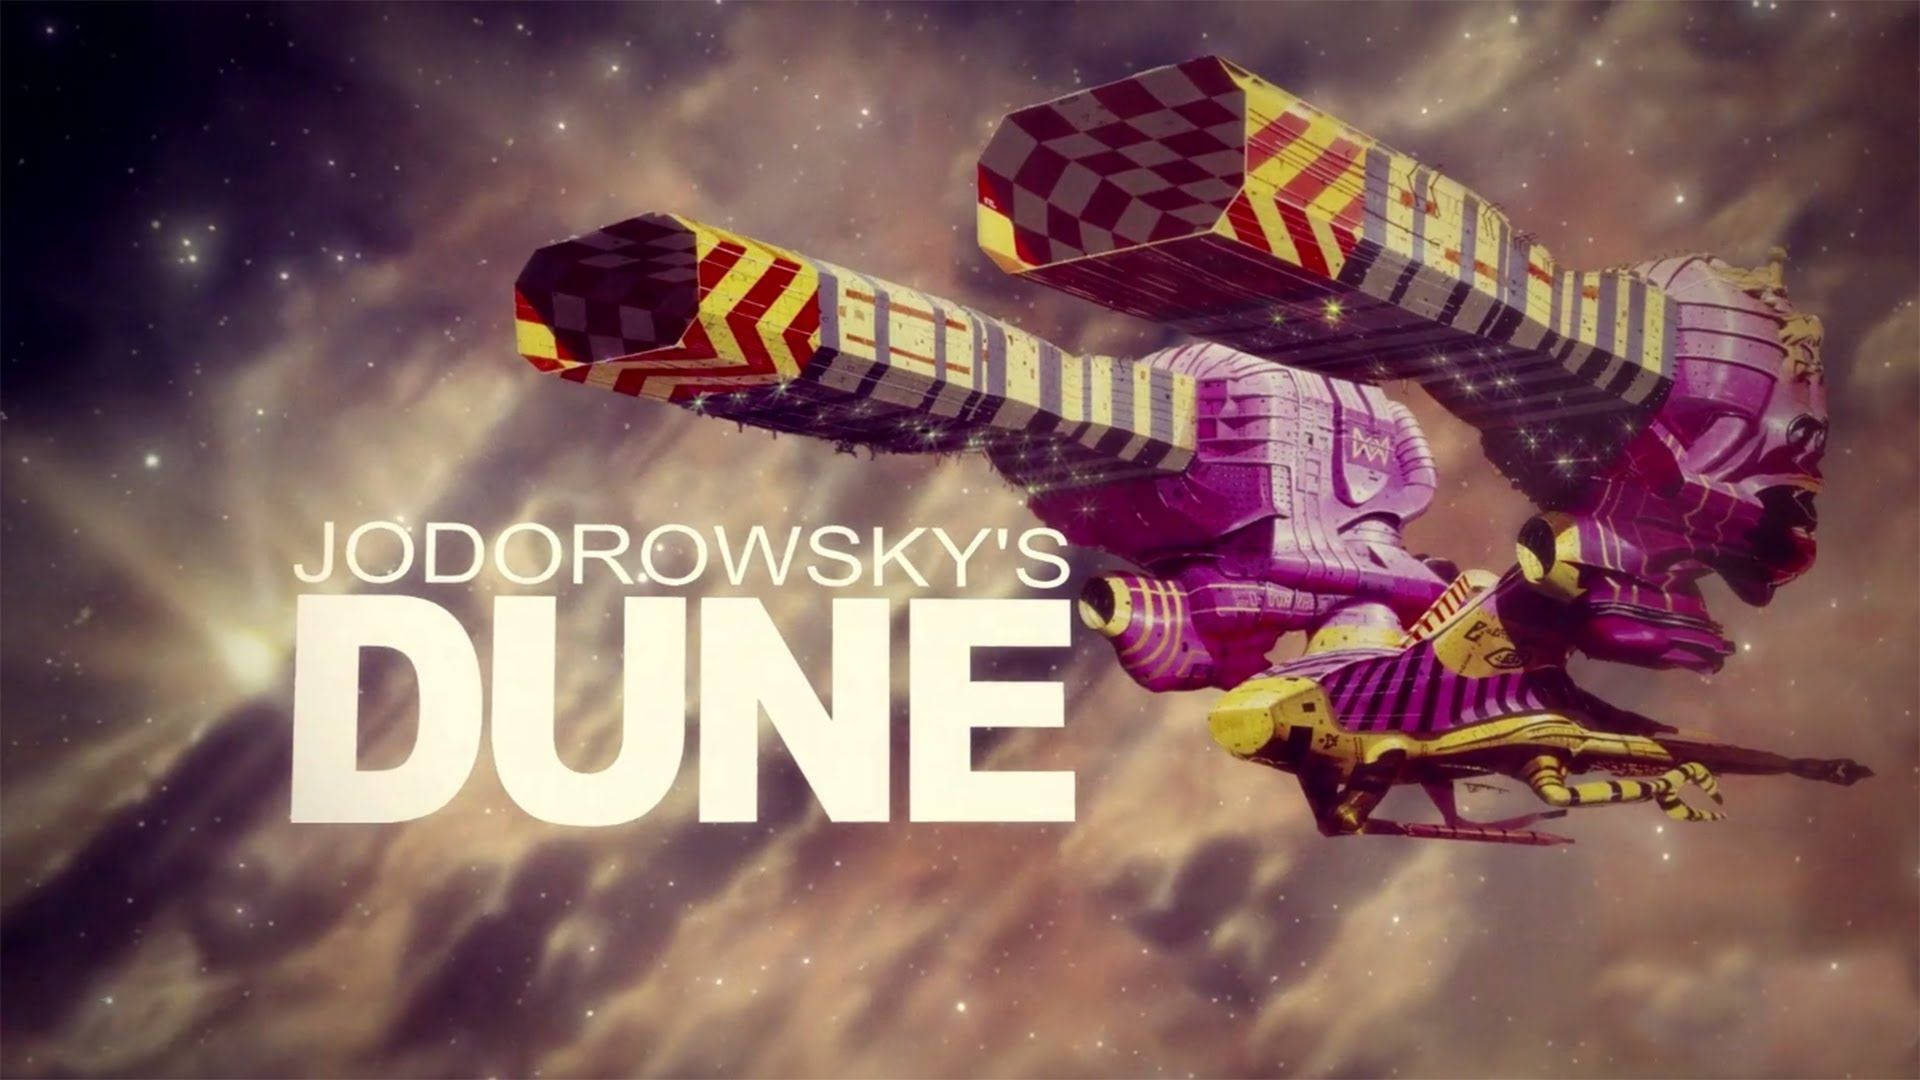 Jodorowsky's Dune Movie Spaceship Cover Wallpaper